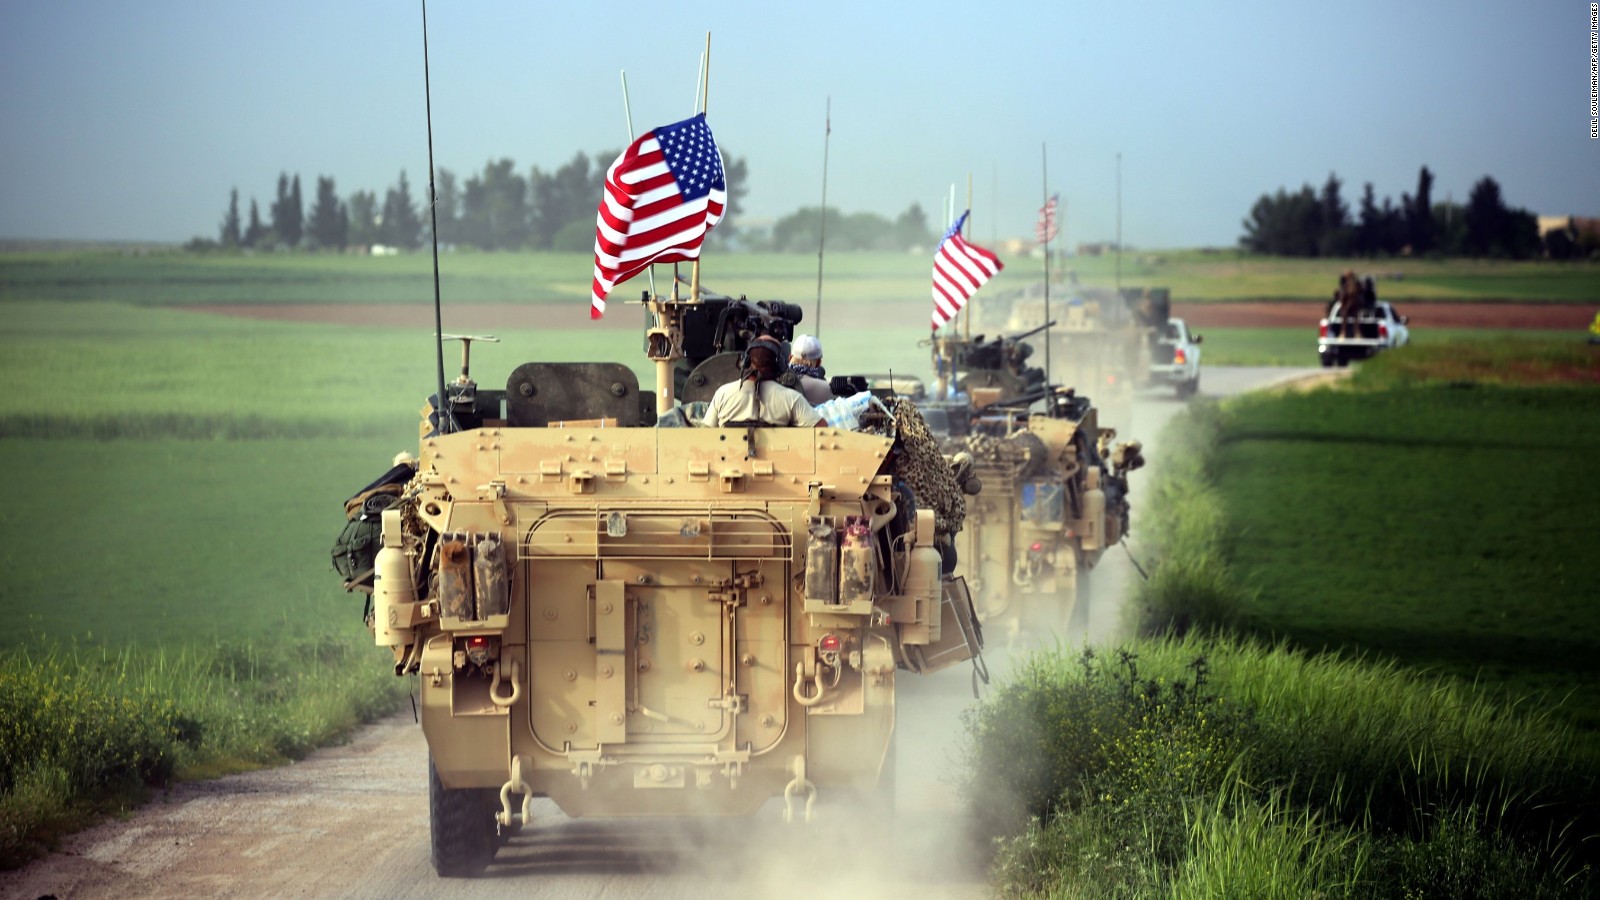 EKTAKTO: Τεράστιες ποσότητες όπλων παραδίδουν οι ΗΠΑ στους Κούρδους λίγο πριν την τουρκική εισβολή